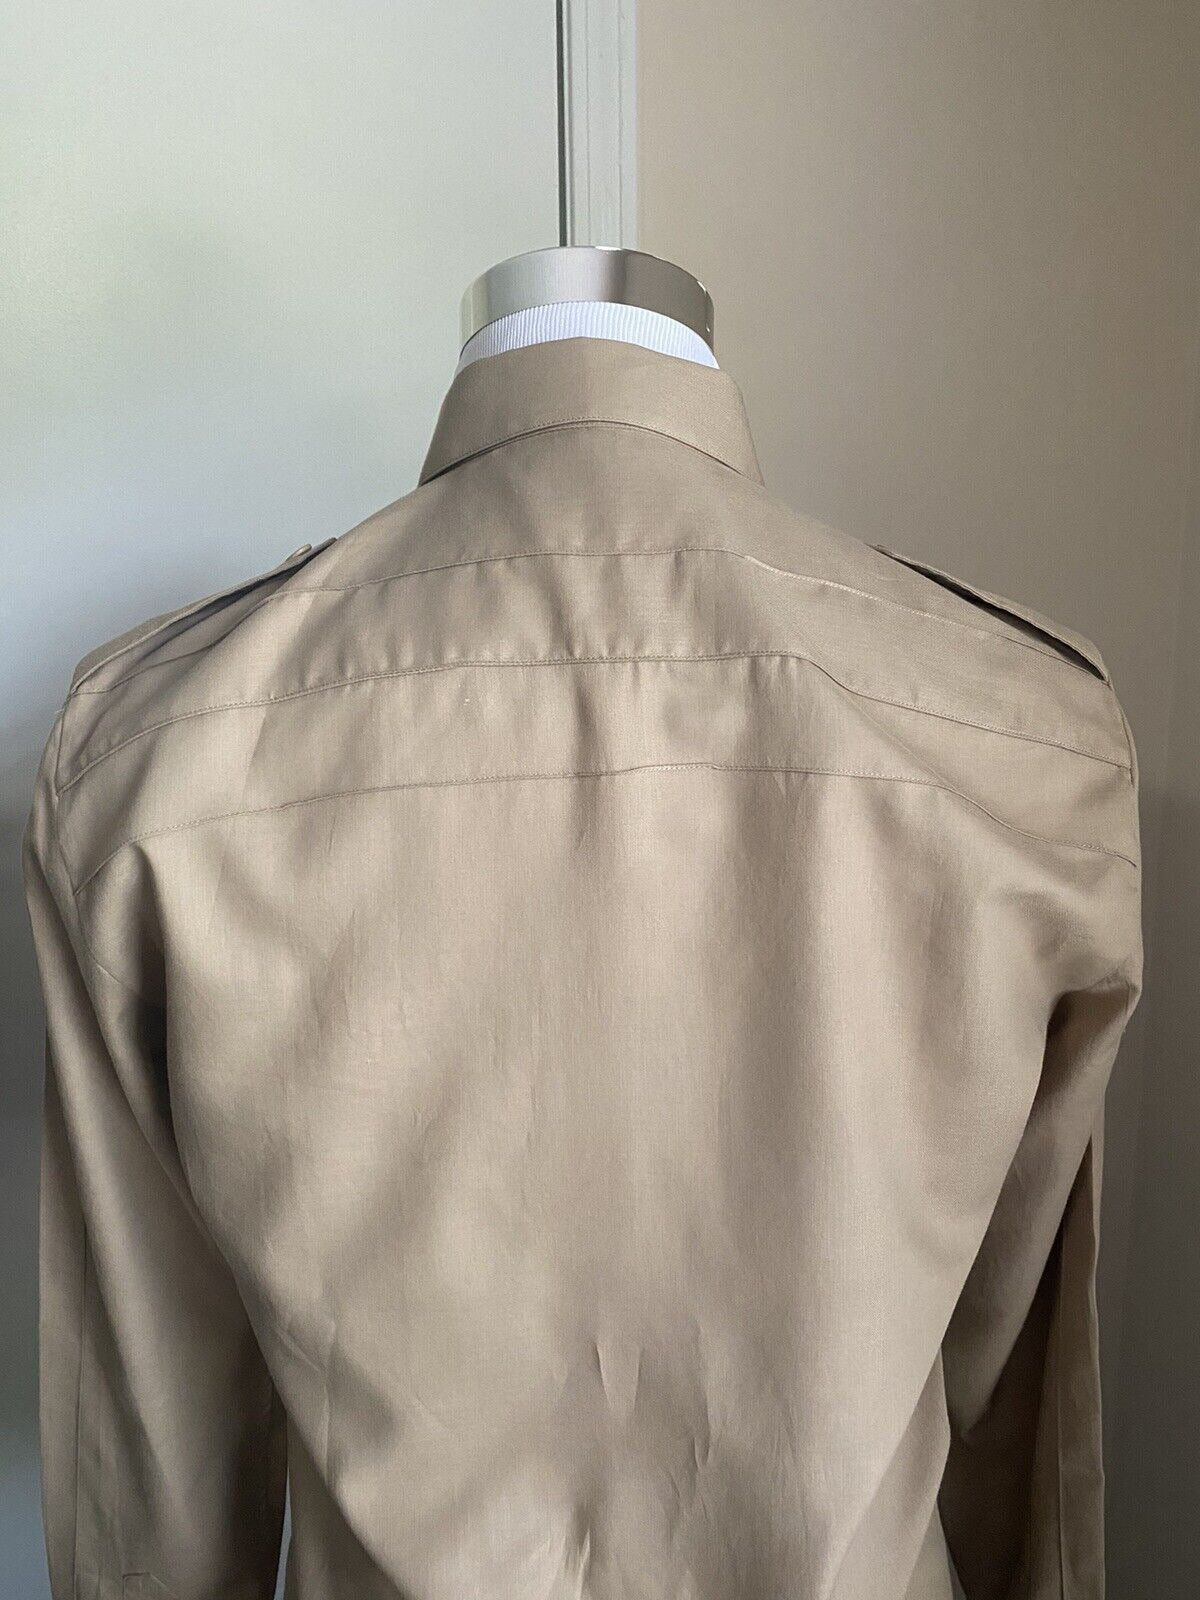 NWT $1190 Мужская рубашка Saint Laurent Бежевая S (38/15) Италия